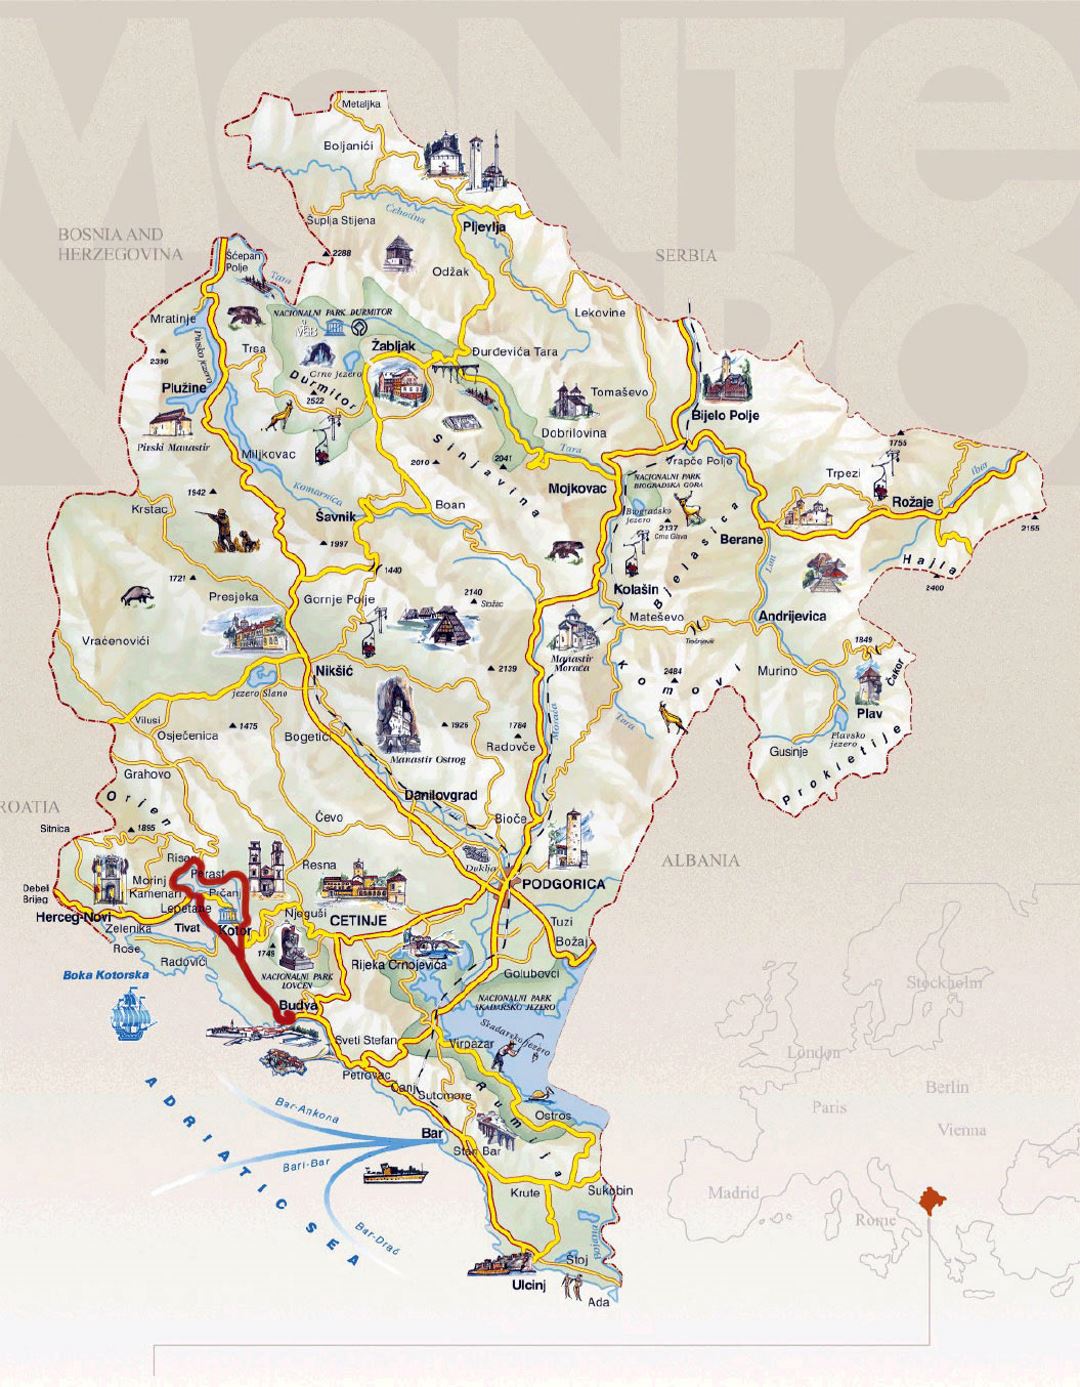 Detailed tourist map of Montenegro